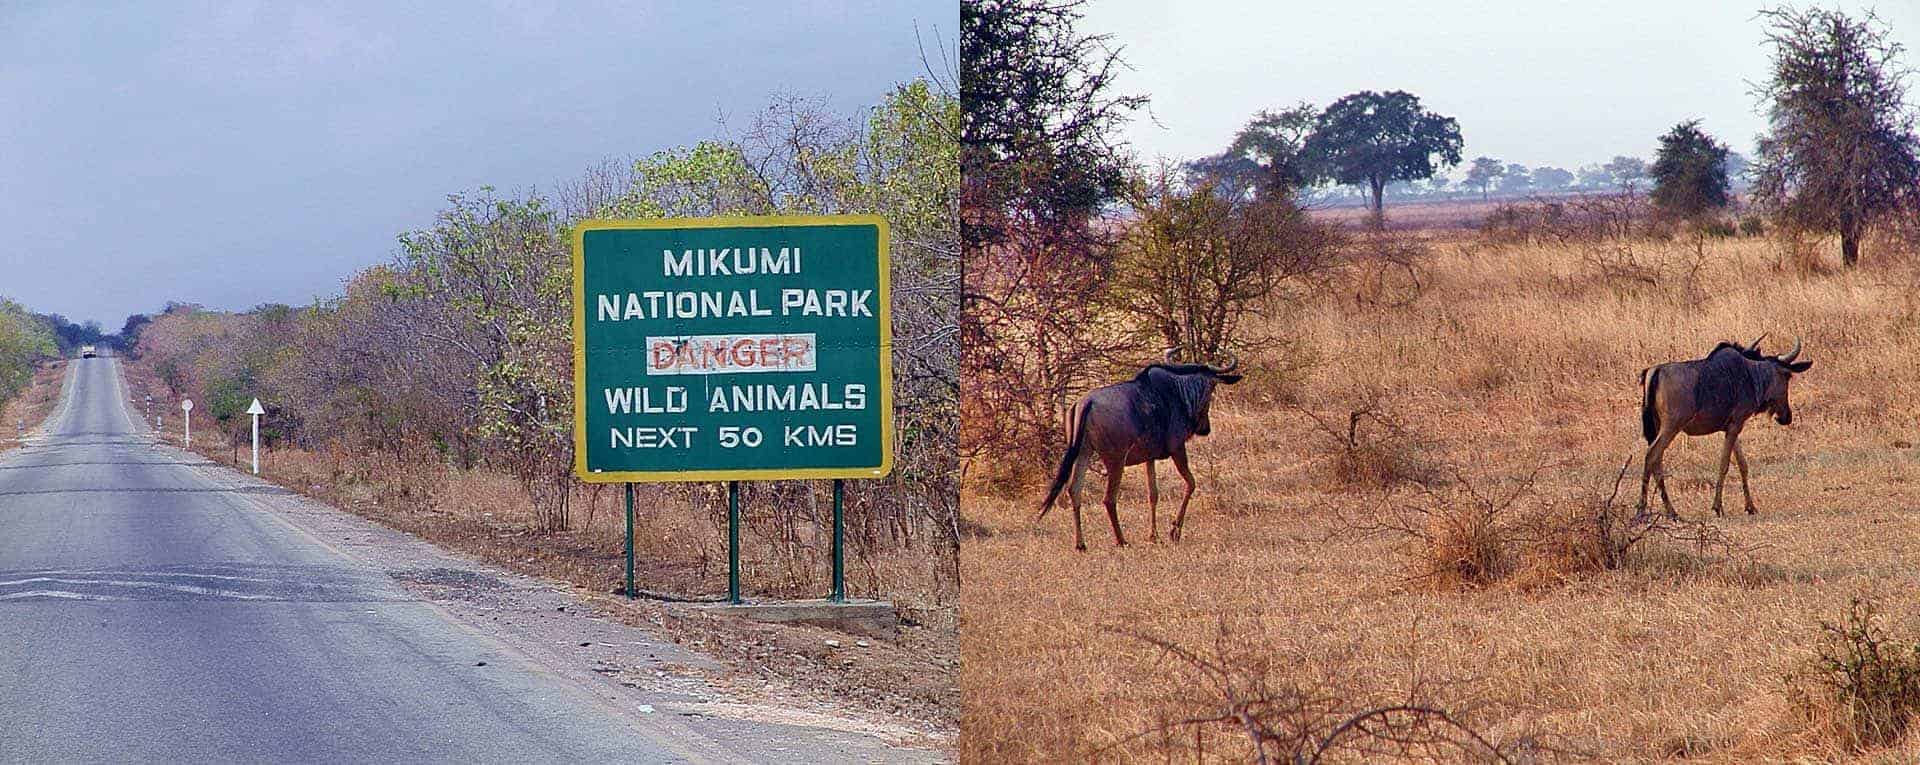 mikumi safari park